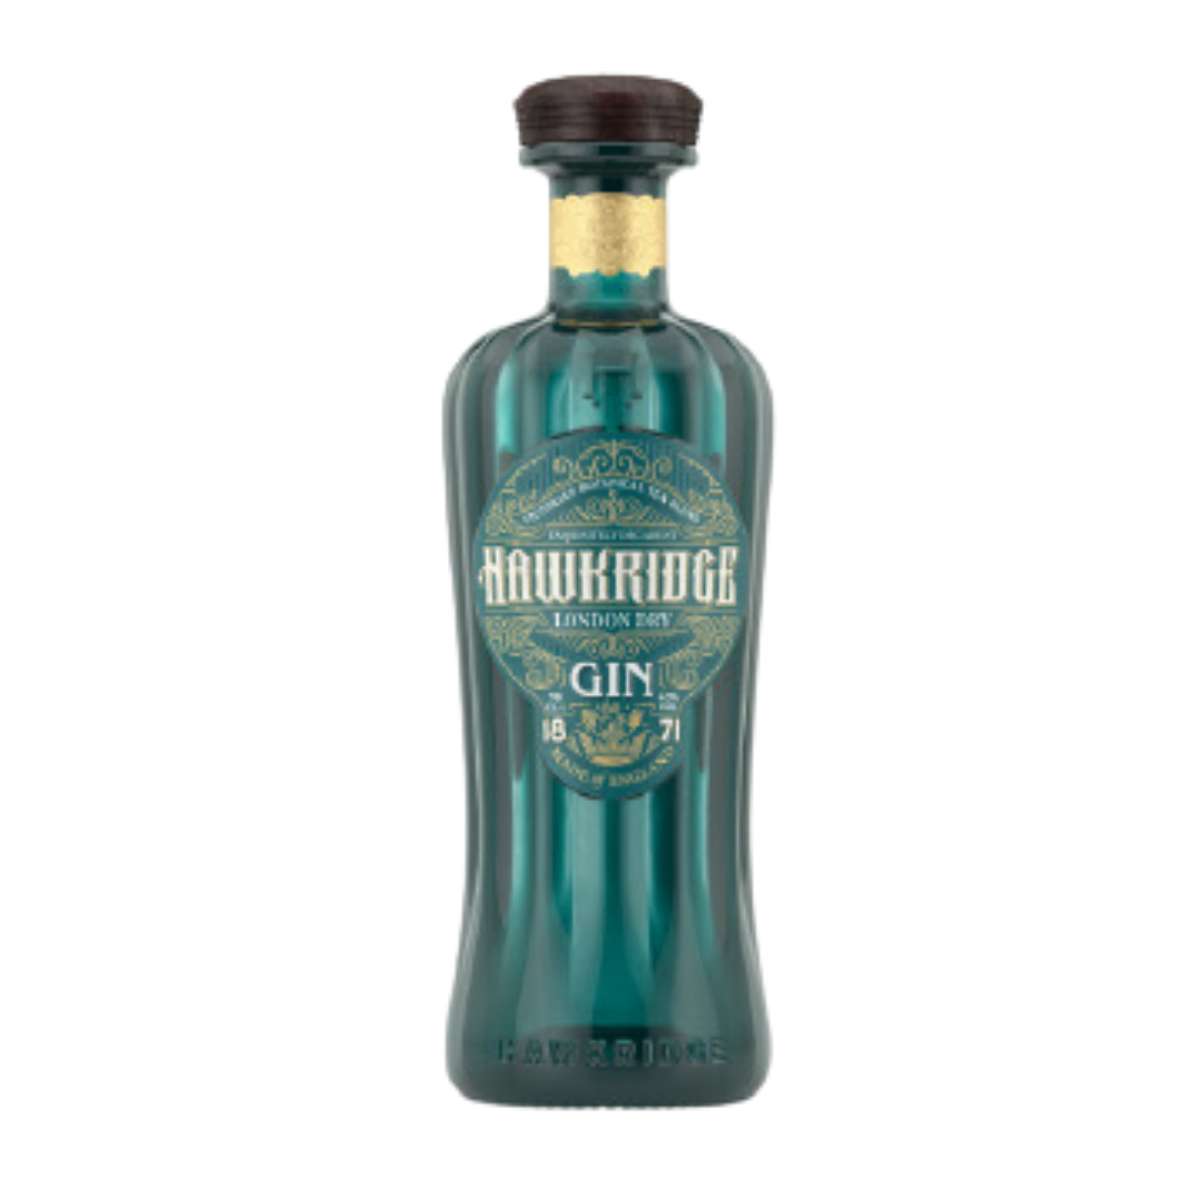 Hawkridge London Dry Gin “Victorian Botanical Blend”, 42.0%